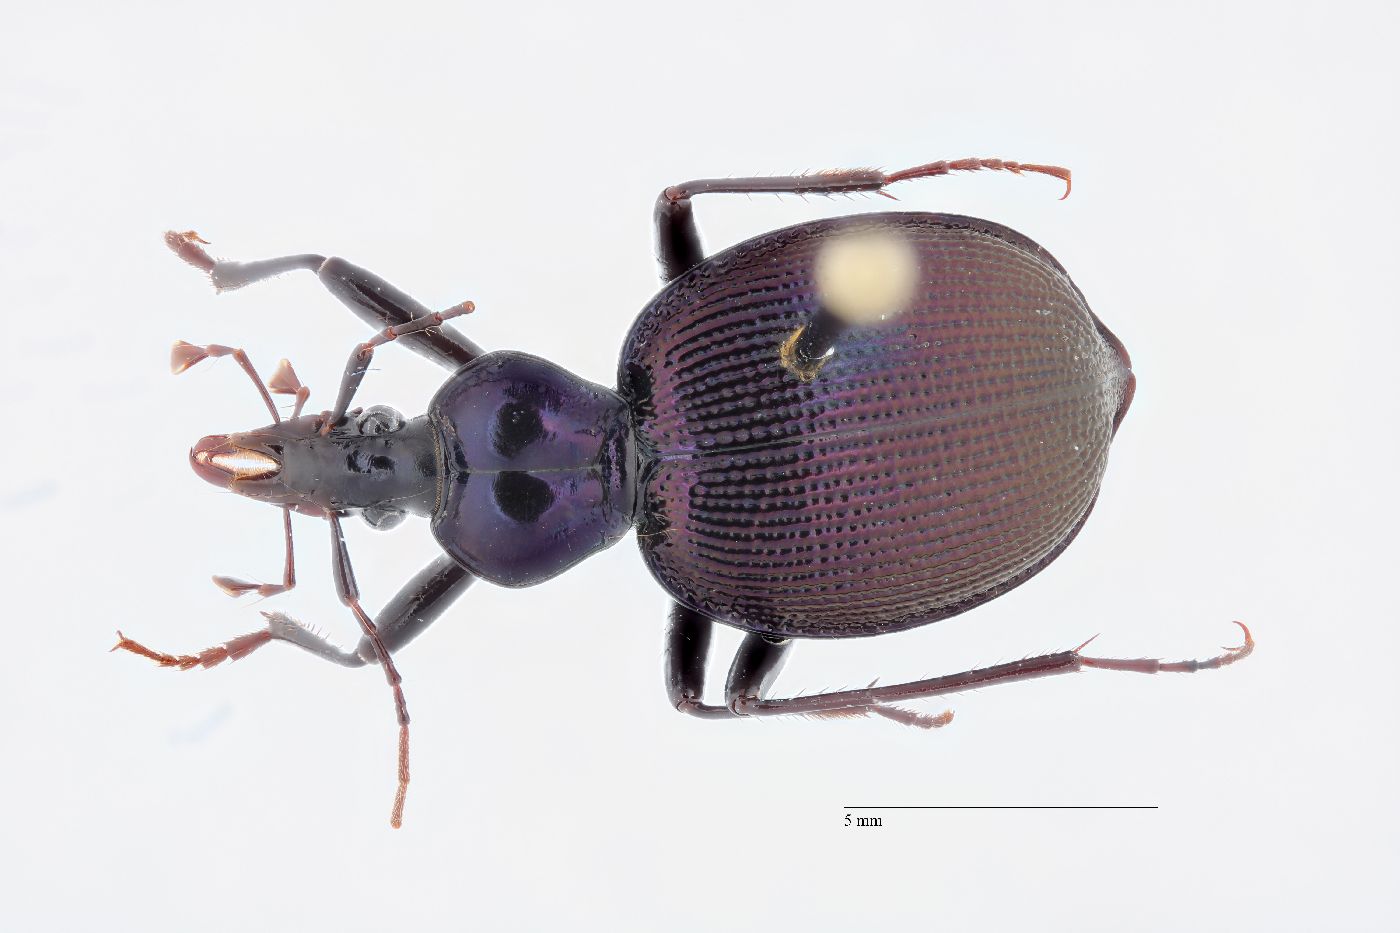 Scaphinotus image